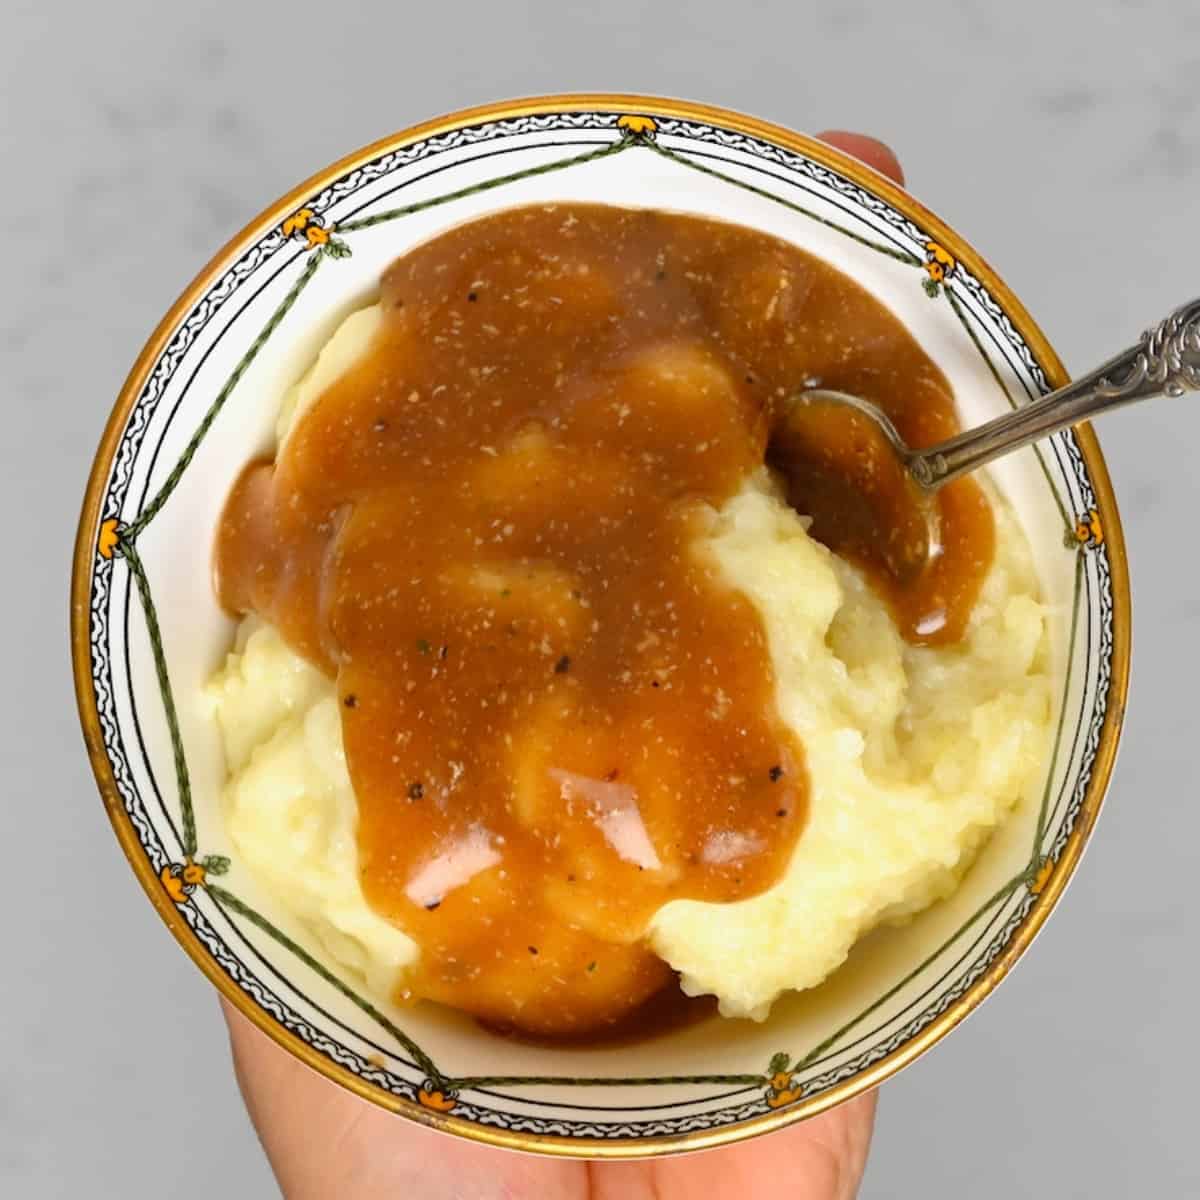 Vegan gravy over mashed potatoes - square